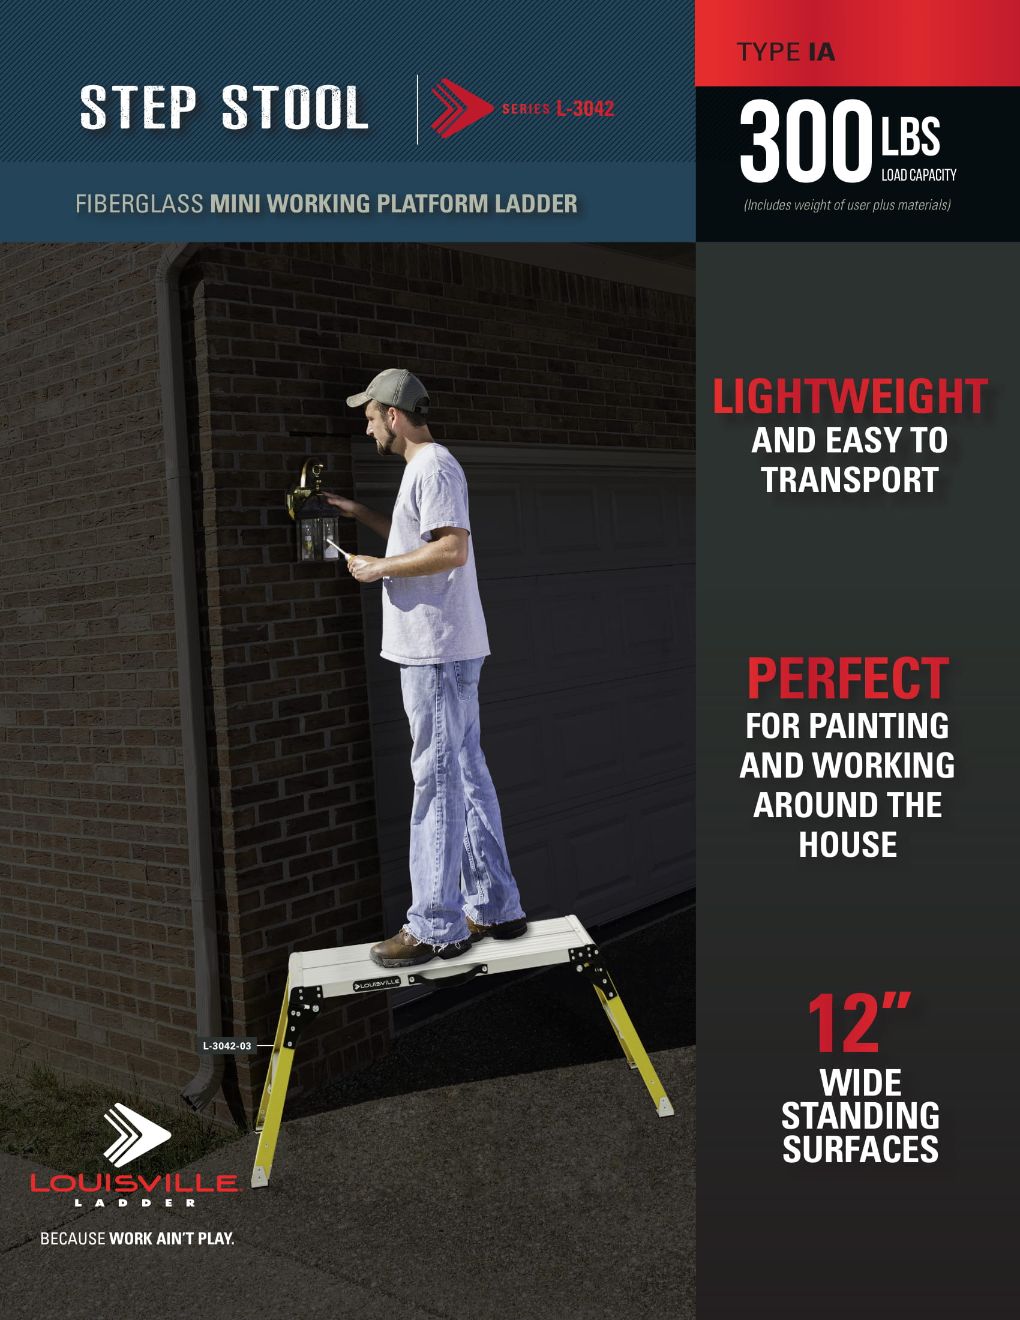 L-3042 Mini Working Platform Ladder Flyer and Spec Sheet Marketing Material Image